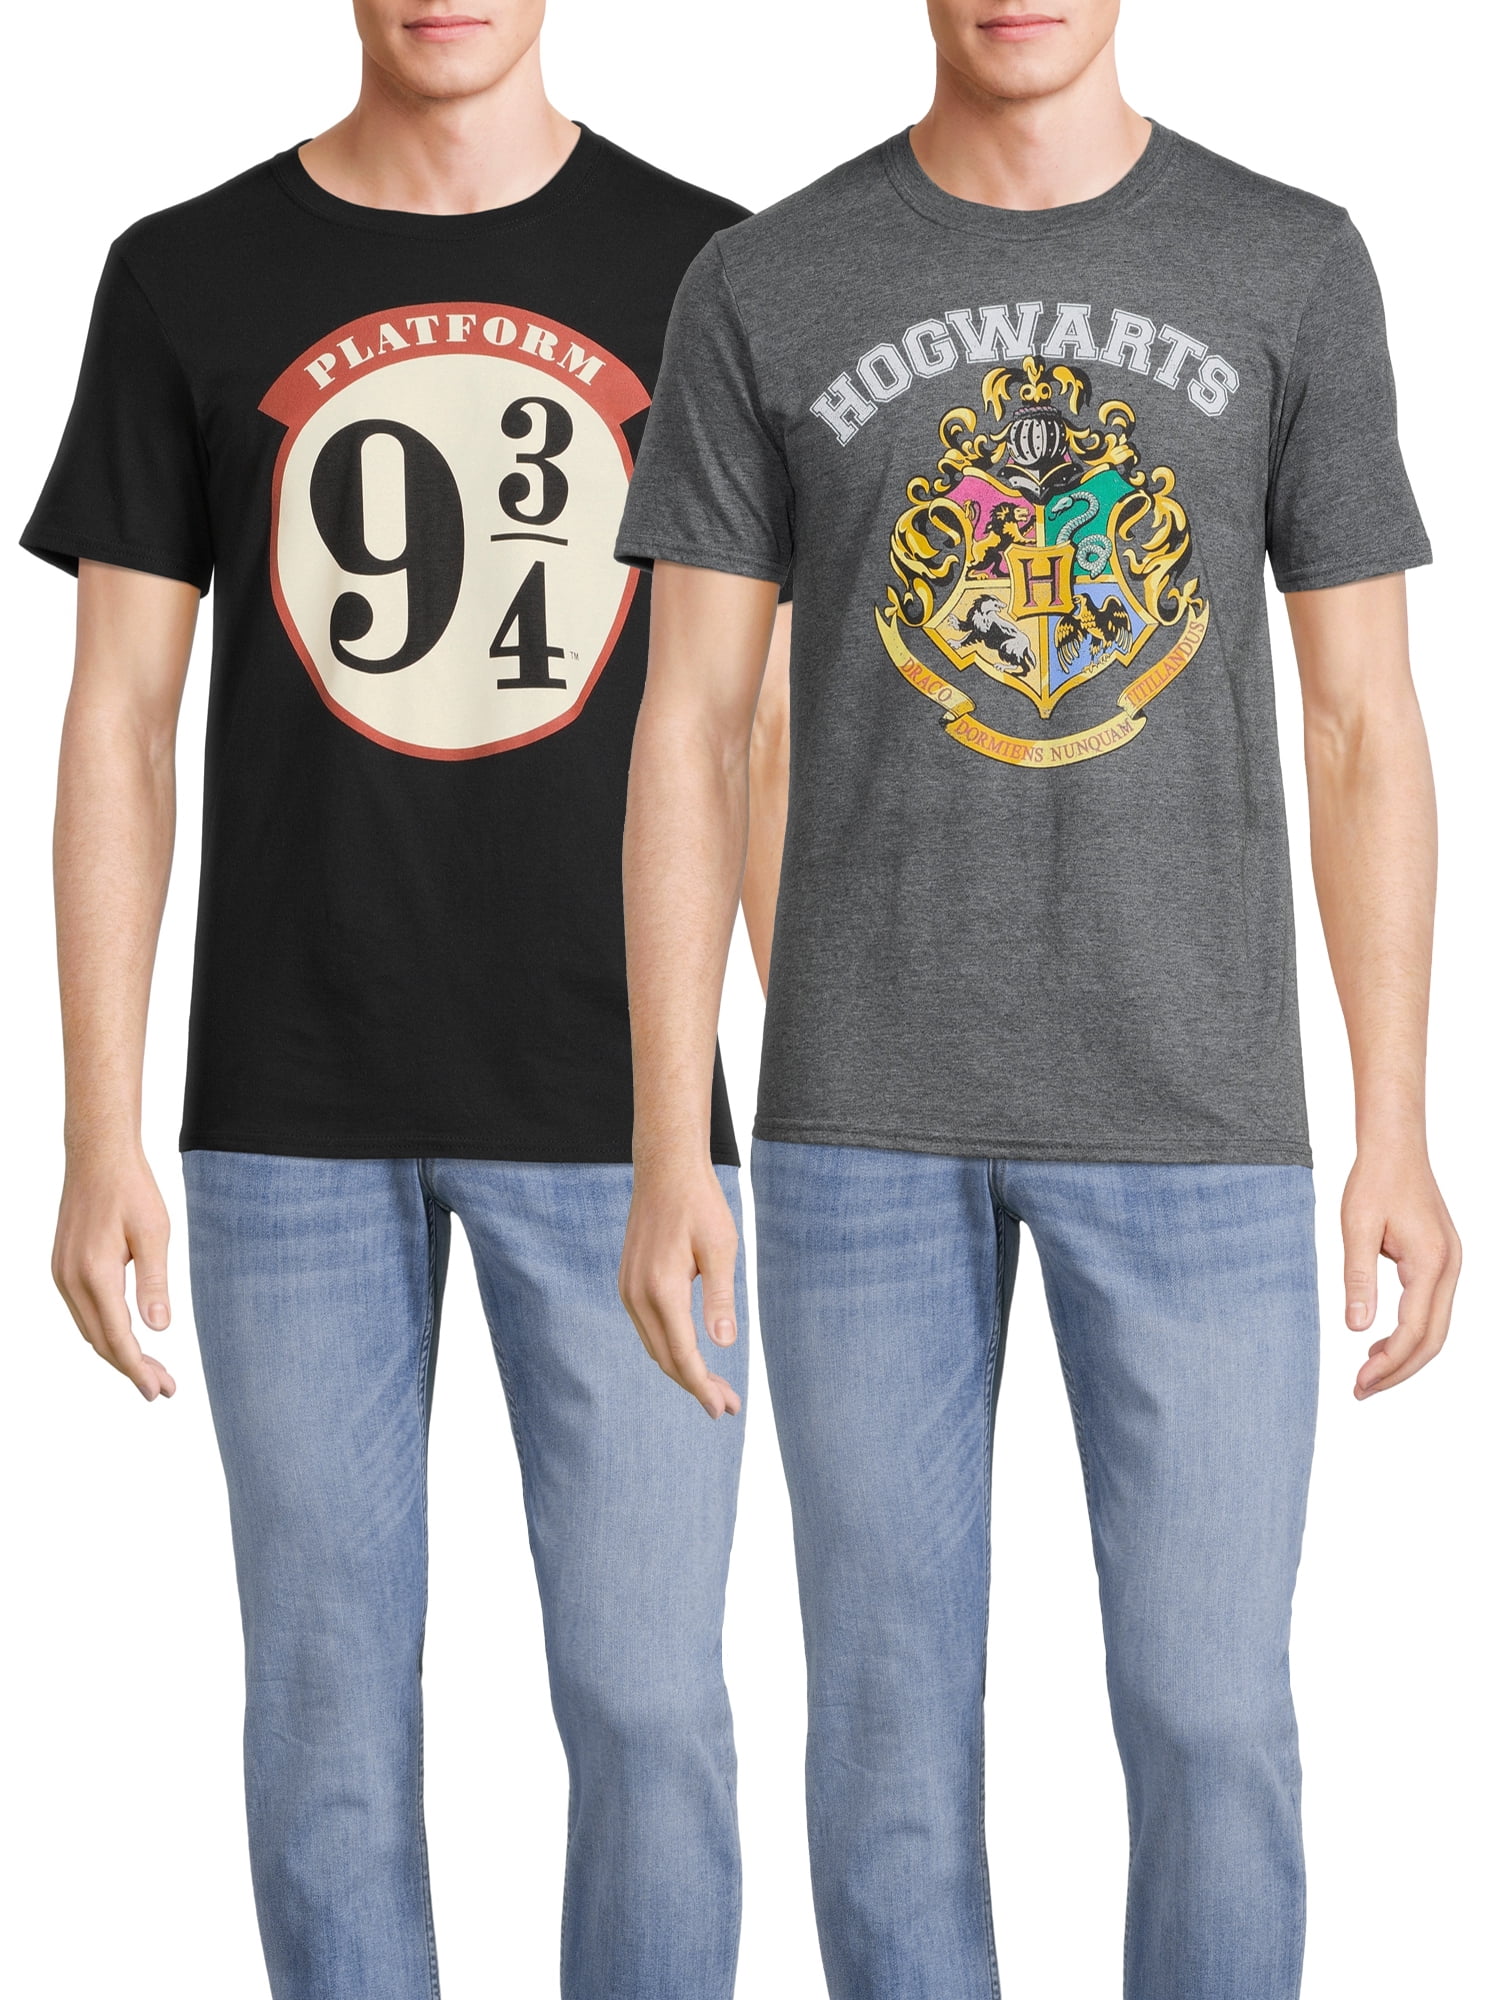 Harry Potter t-shirt Hommes T Shirt Tshirt Manches Courtes Top Loisirs 8708 